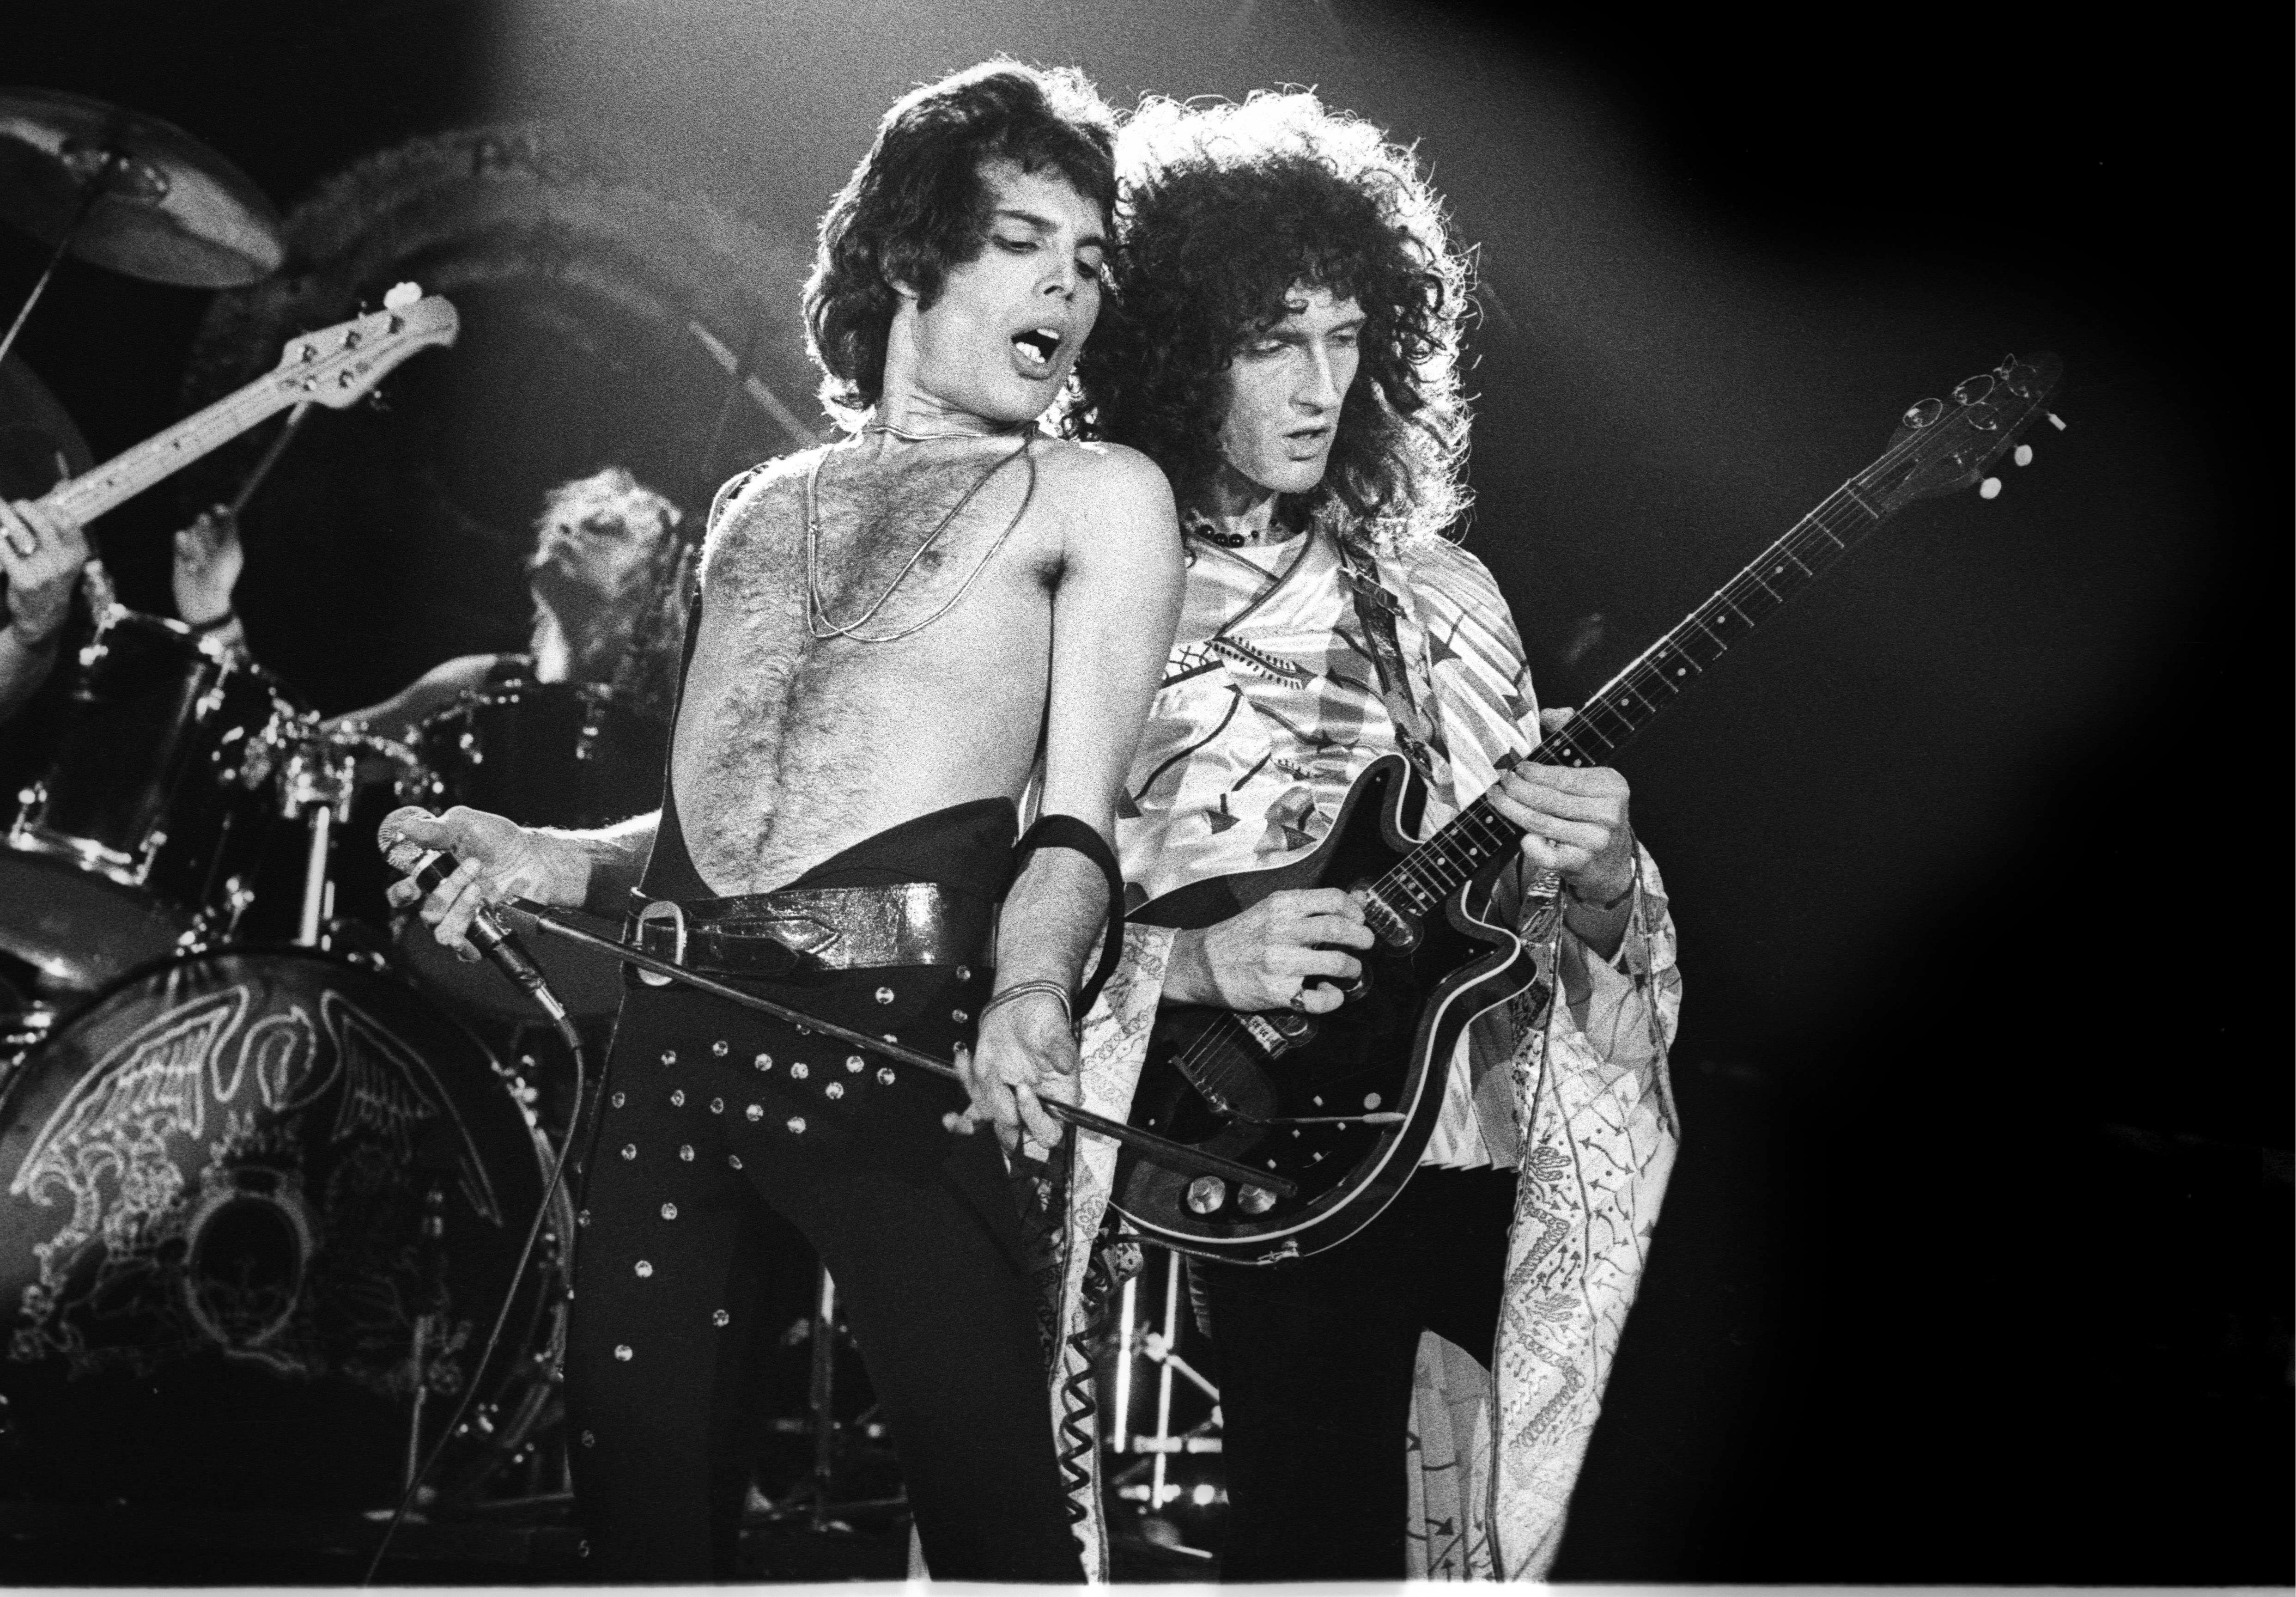 Queen band. Группа Queen 70s. Брайан Мэй на концерте Queen. Группа Квин фото. Группа Queen Фредди Меркьюри.